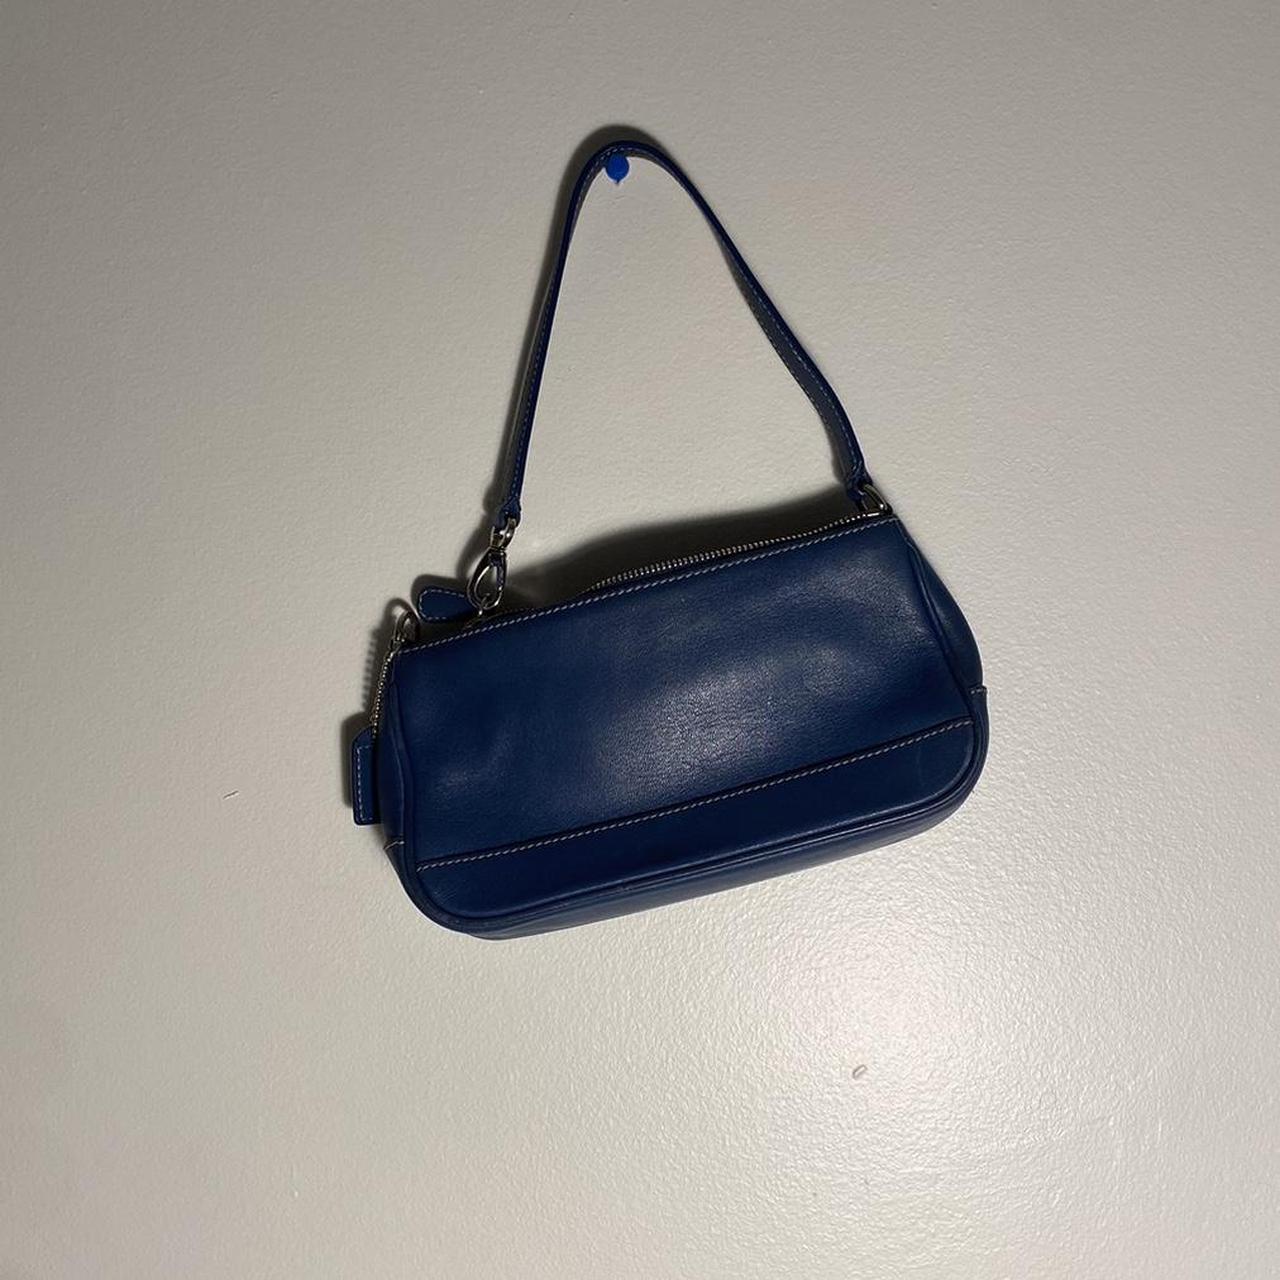 Authentic Vintage COACH Navy Blue Purse Handbag EUC | eBay